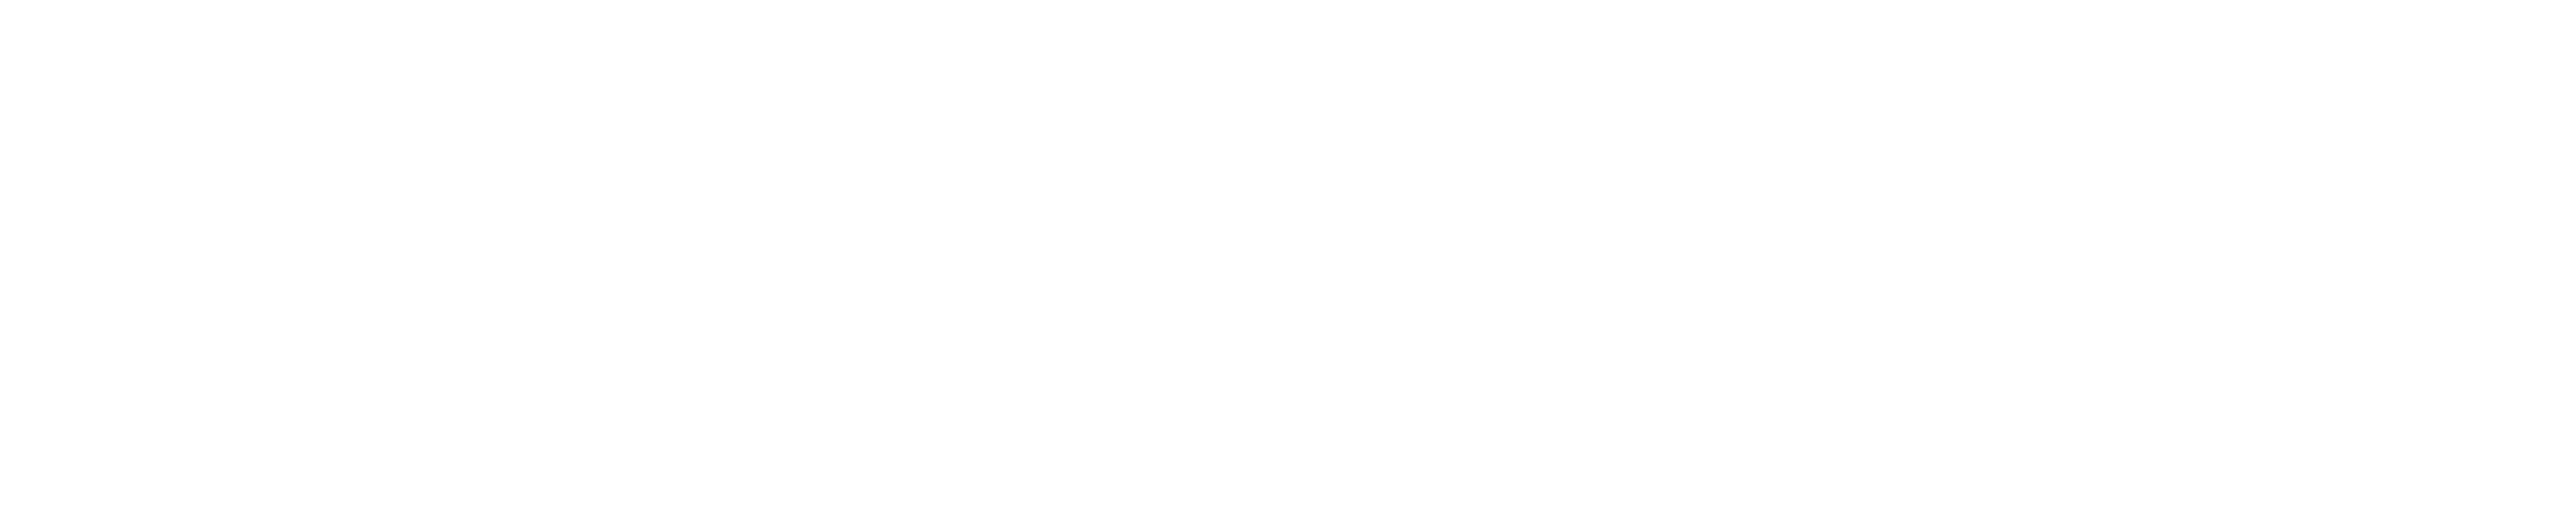 PaulBarrell